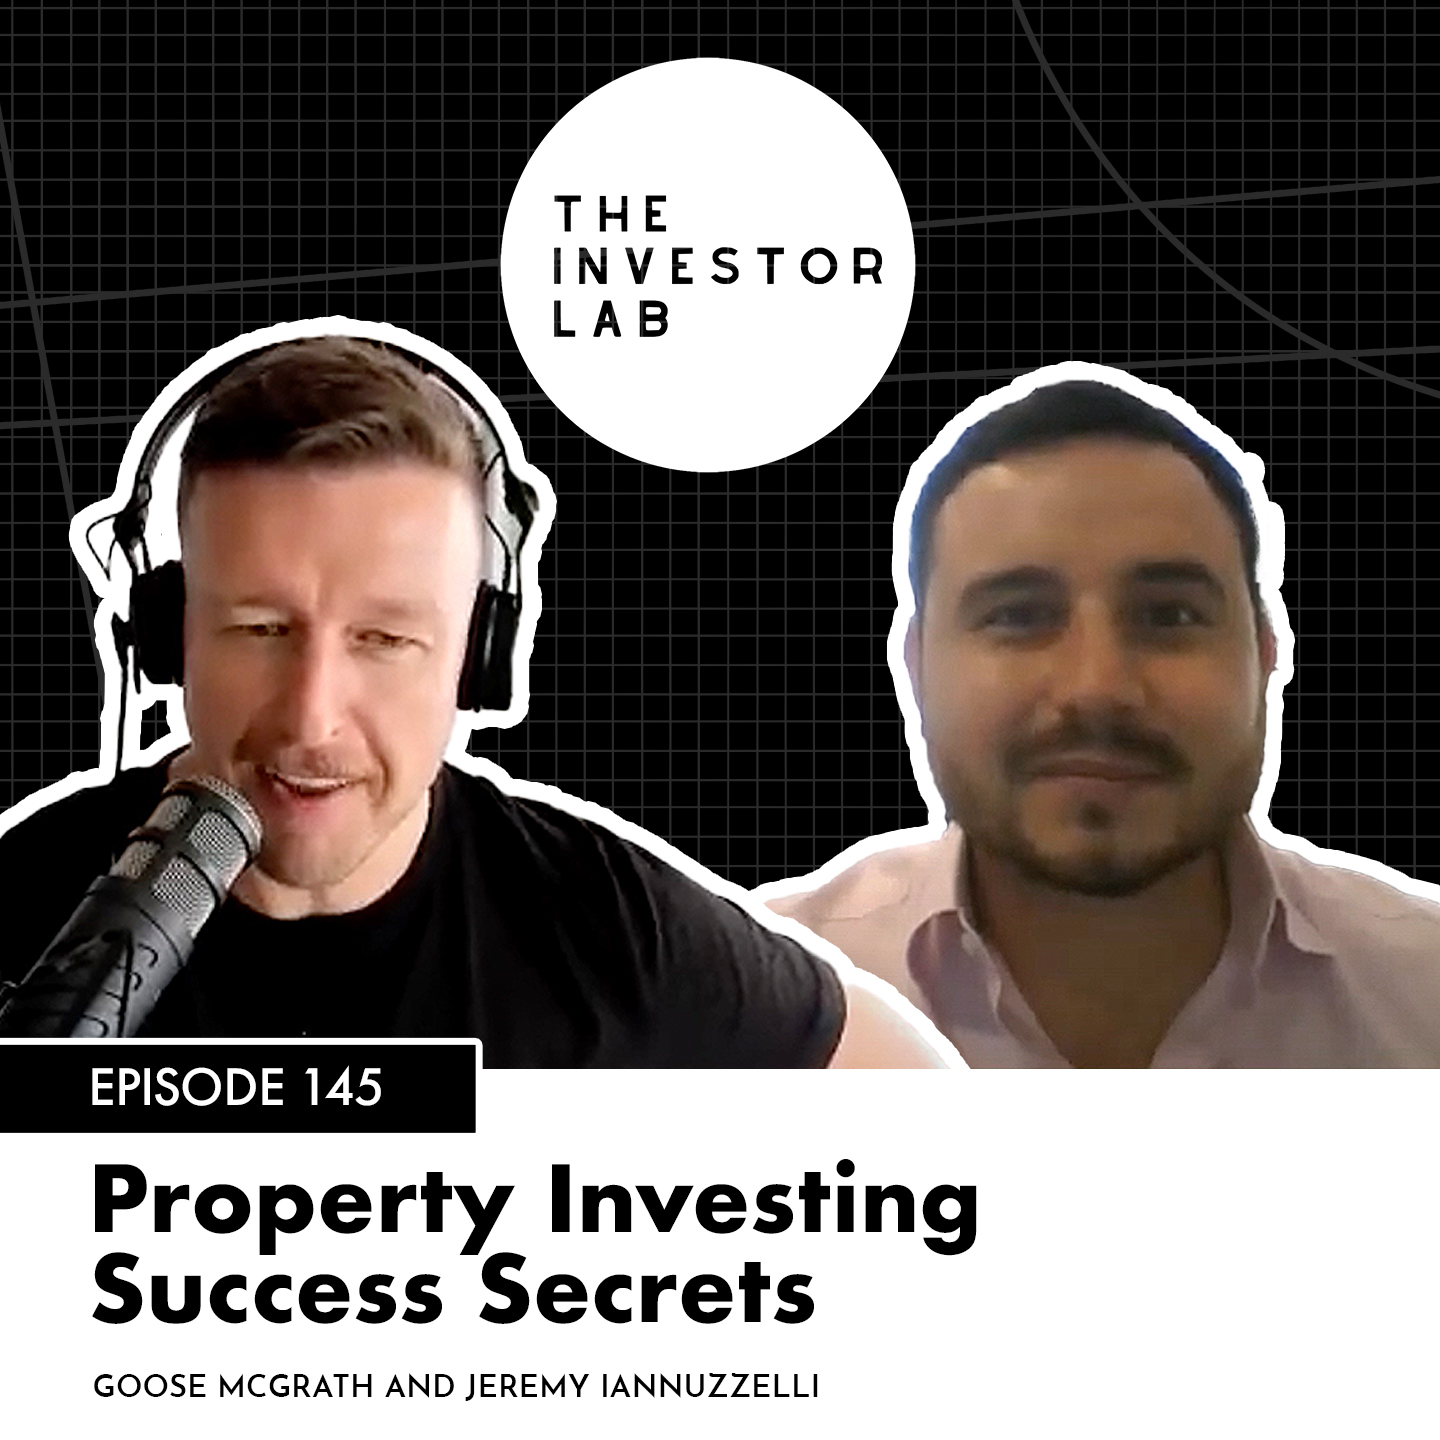 Property Investing Success Secrets with Jeremy Iannuzzelli